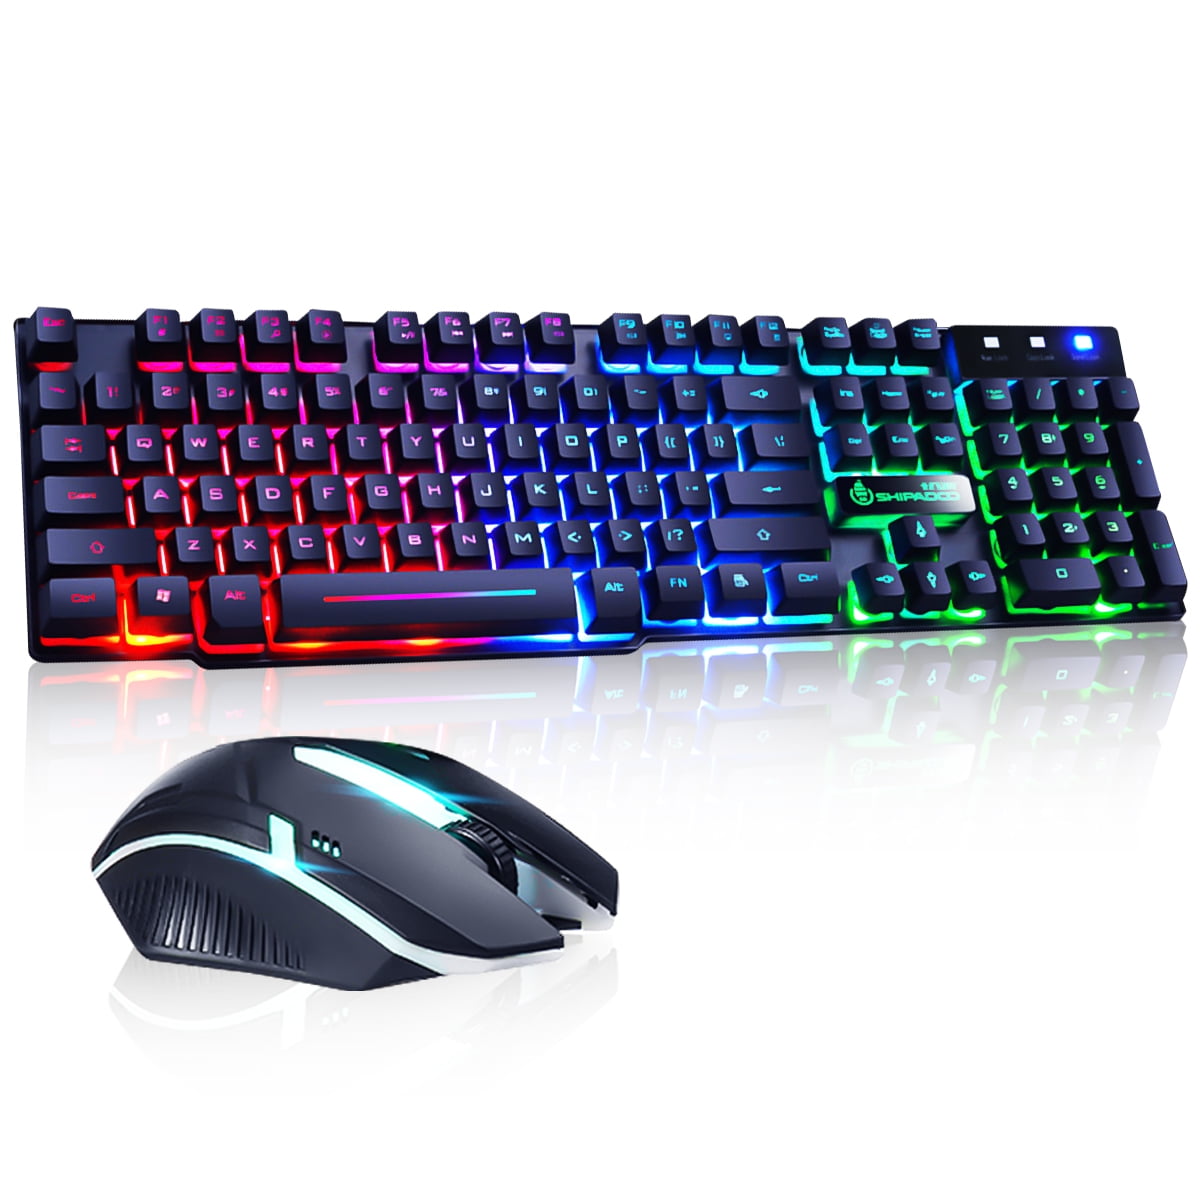 RGB Backlit Keyboard and Mouse Kit 3 Color Rainbow LED Illuminated Anti-ghosting 